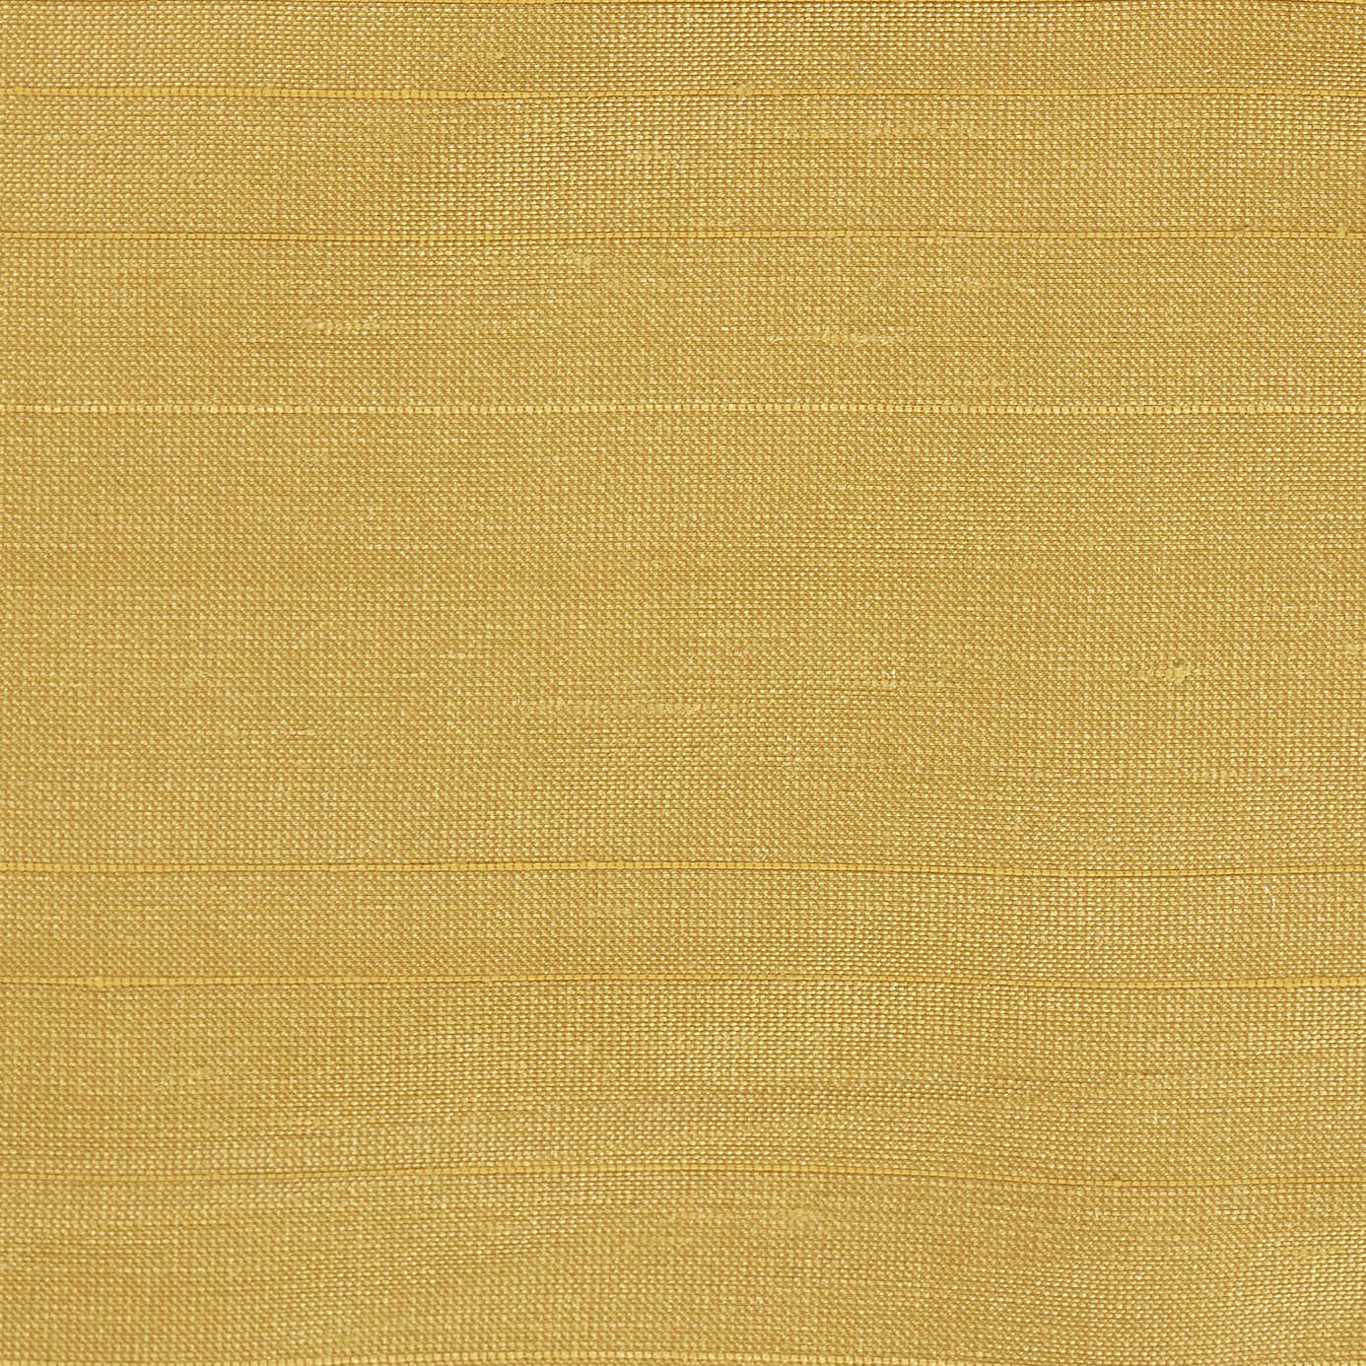 Deflect Mustard Fabric by HAR